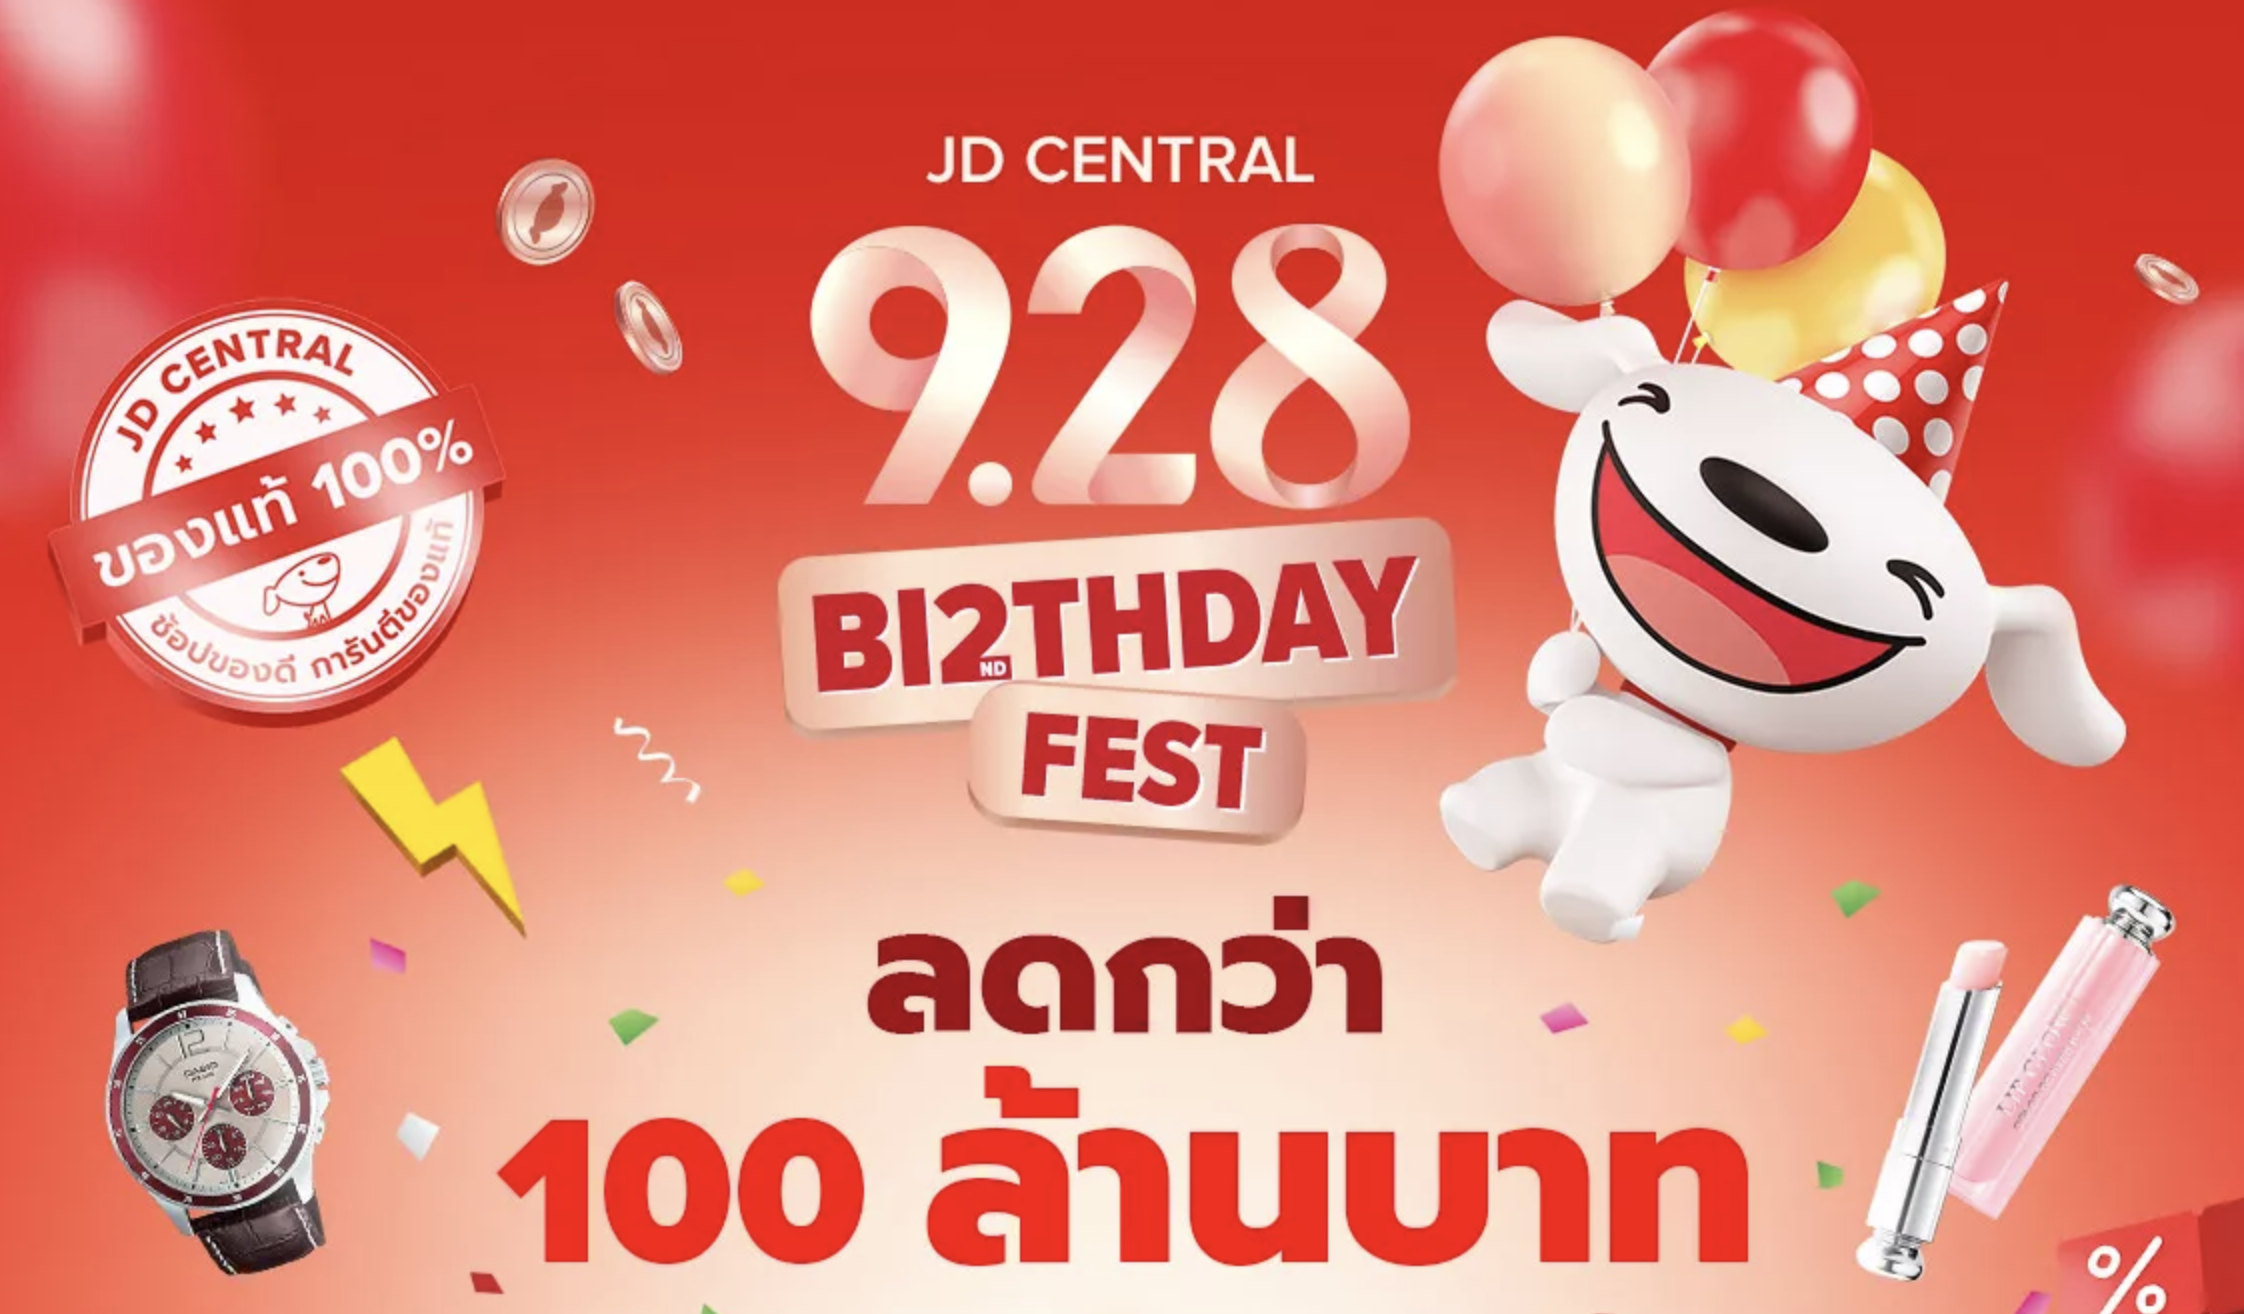 jdcentral-928-birthday-fest